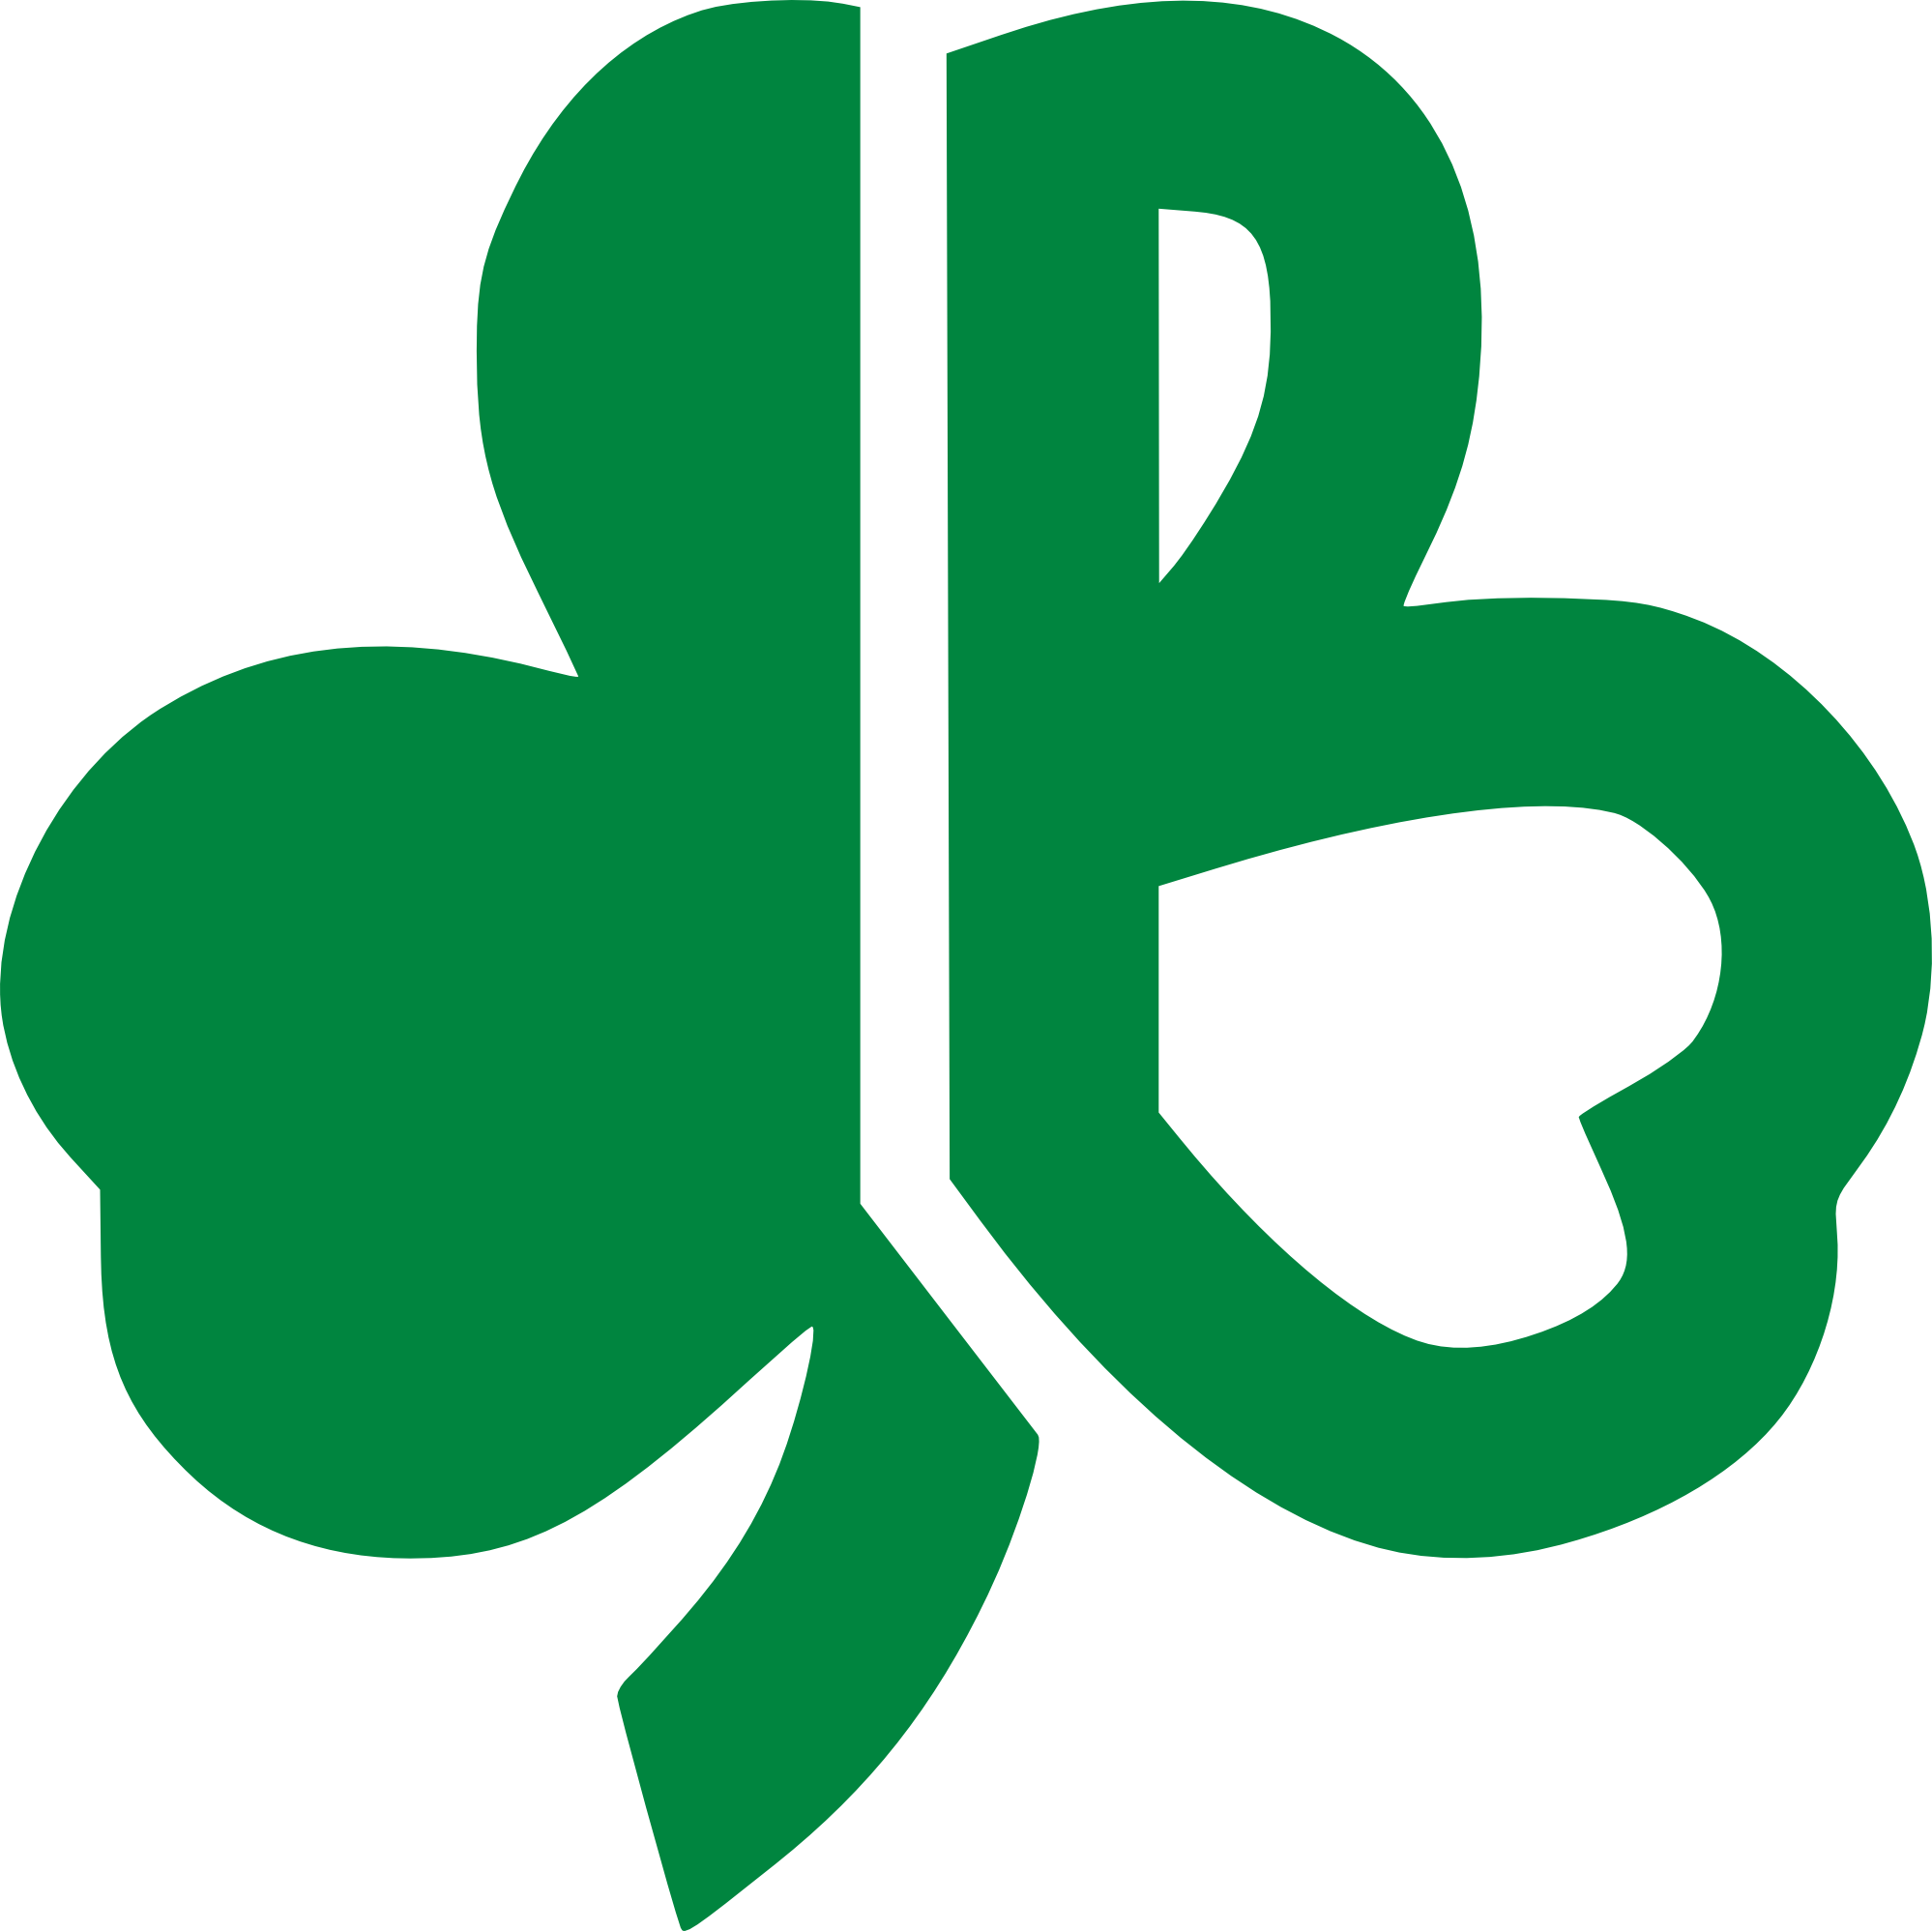 Capital B Logo - Vintage 1970's Boston Celtics clover shamrock capital B logo's